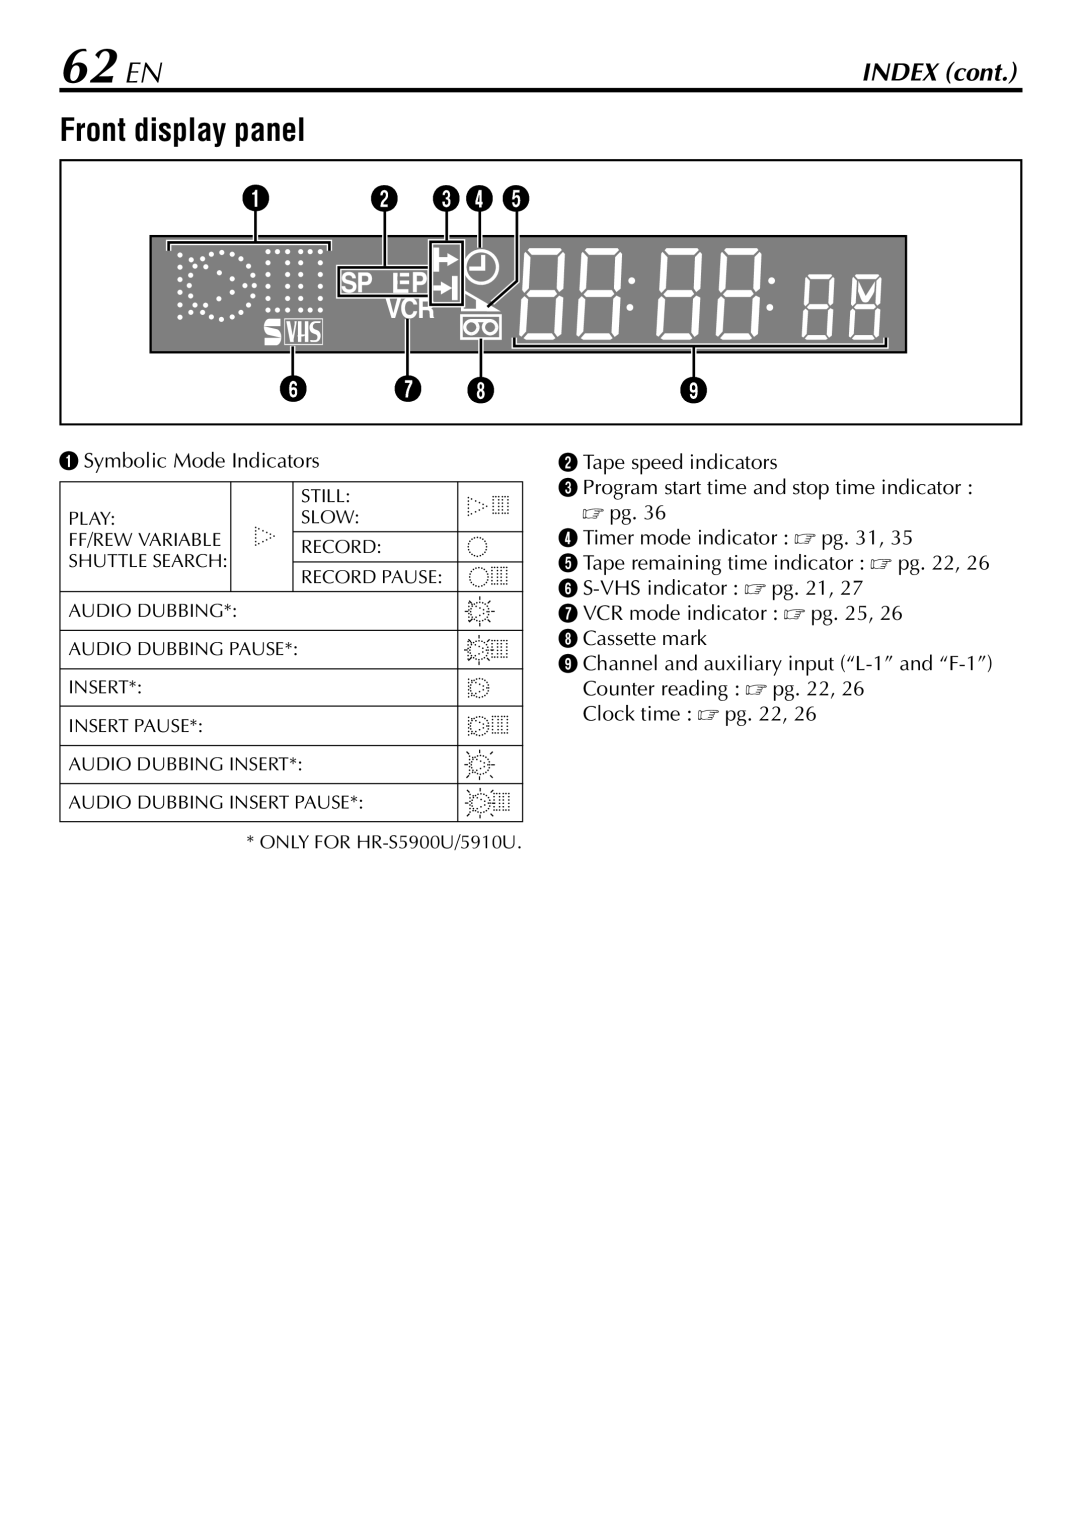 JVC HR-5910U manual 62 EN, Only for HR-S5900U/5910U 